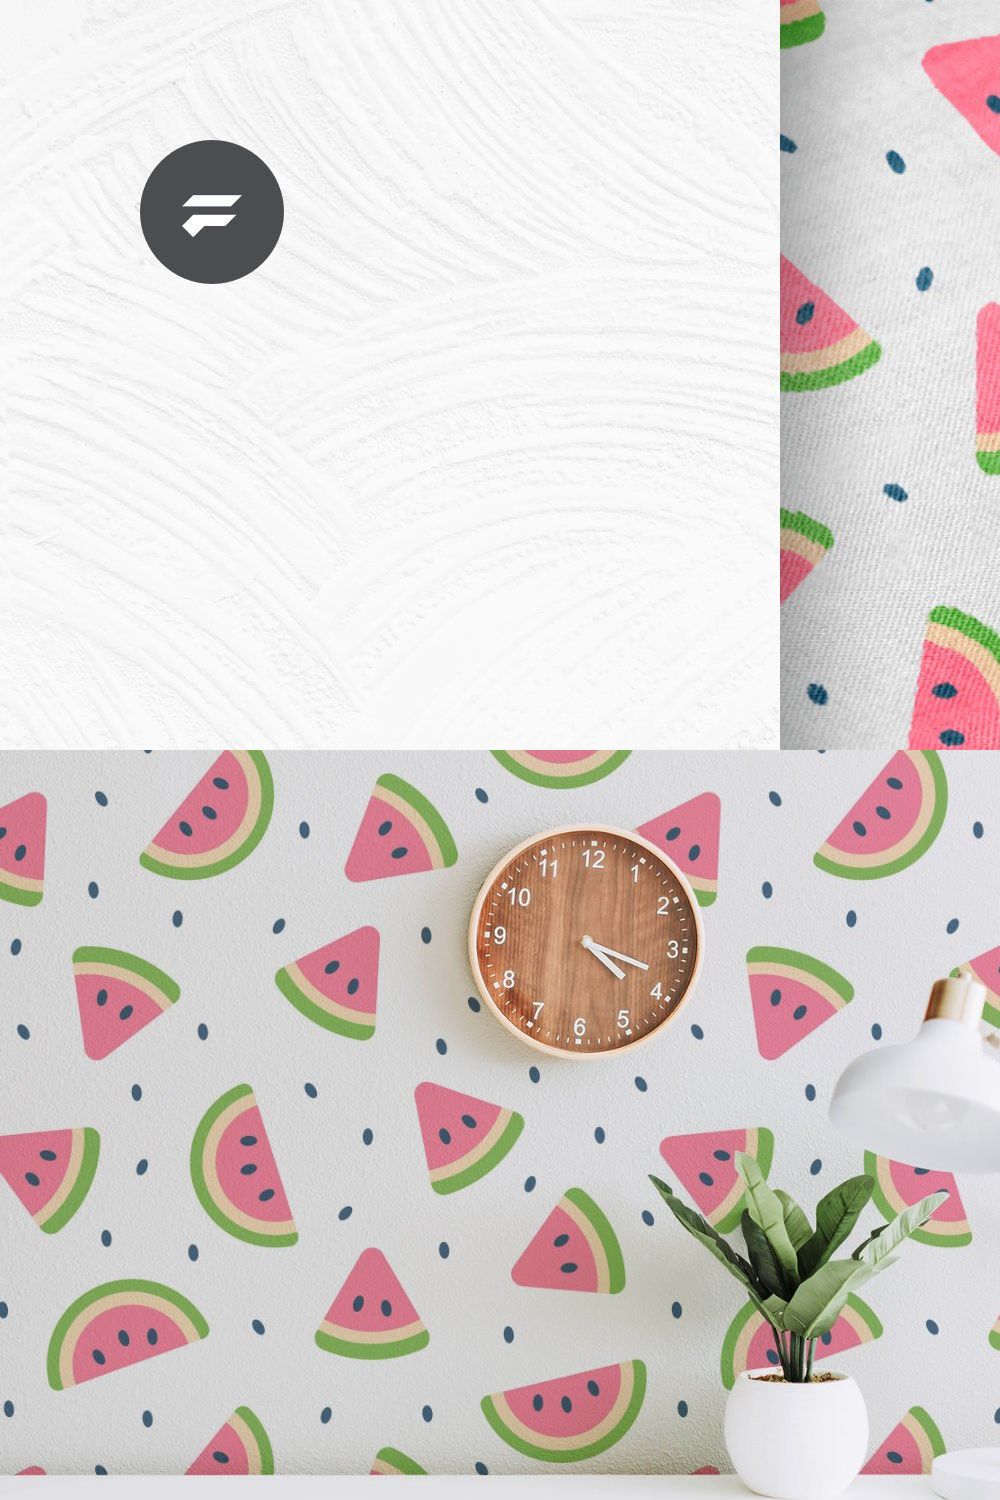 Cute Watermelon Pattern pinterest preview image.